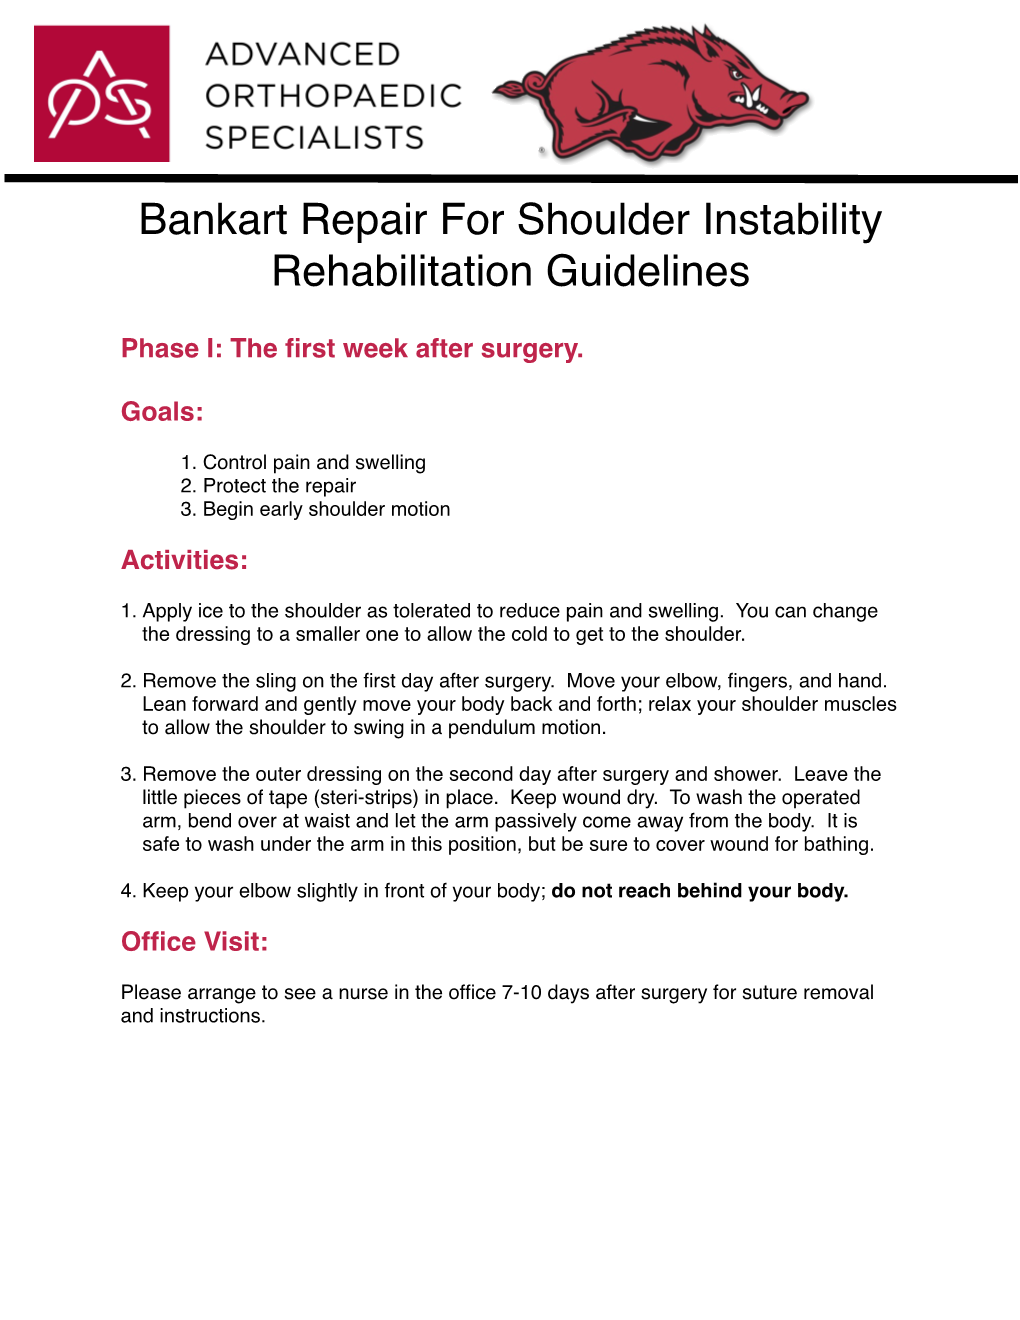 Bankart Repair for Shoulder Instability Rehab Protocol